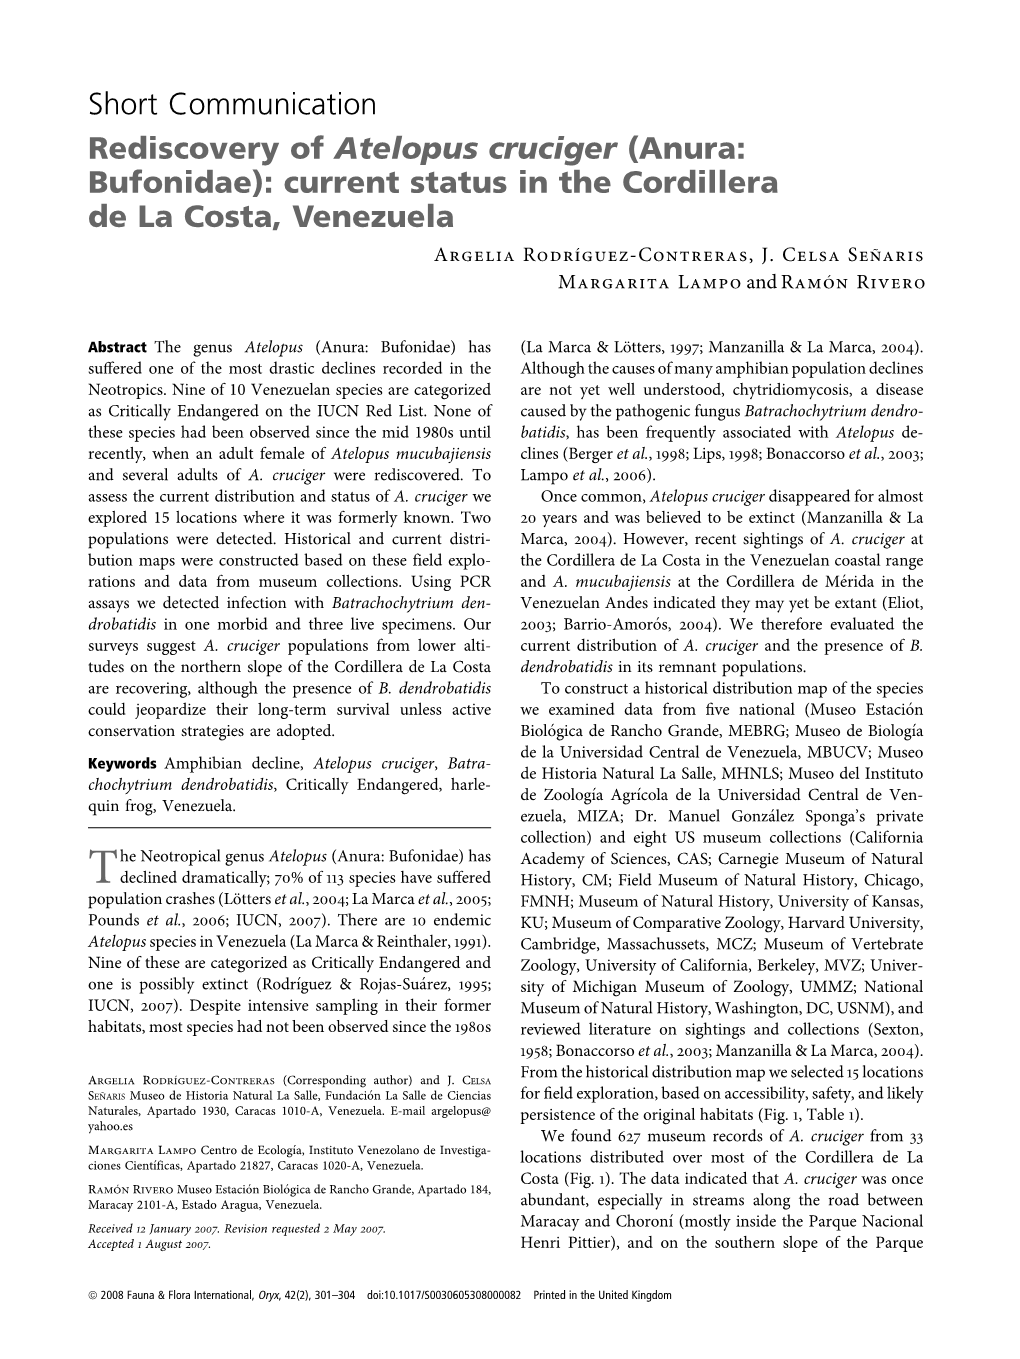 Short Communication Rediscovery of Atelopus Cruciger (Anura: Bufonidae): Current Status in the Cordillera De La Costa, Venezuela